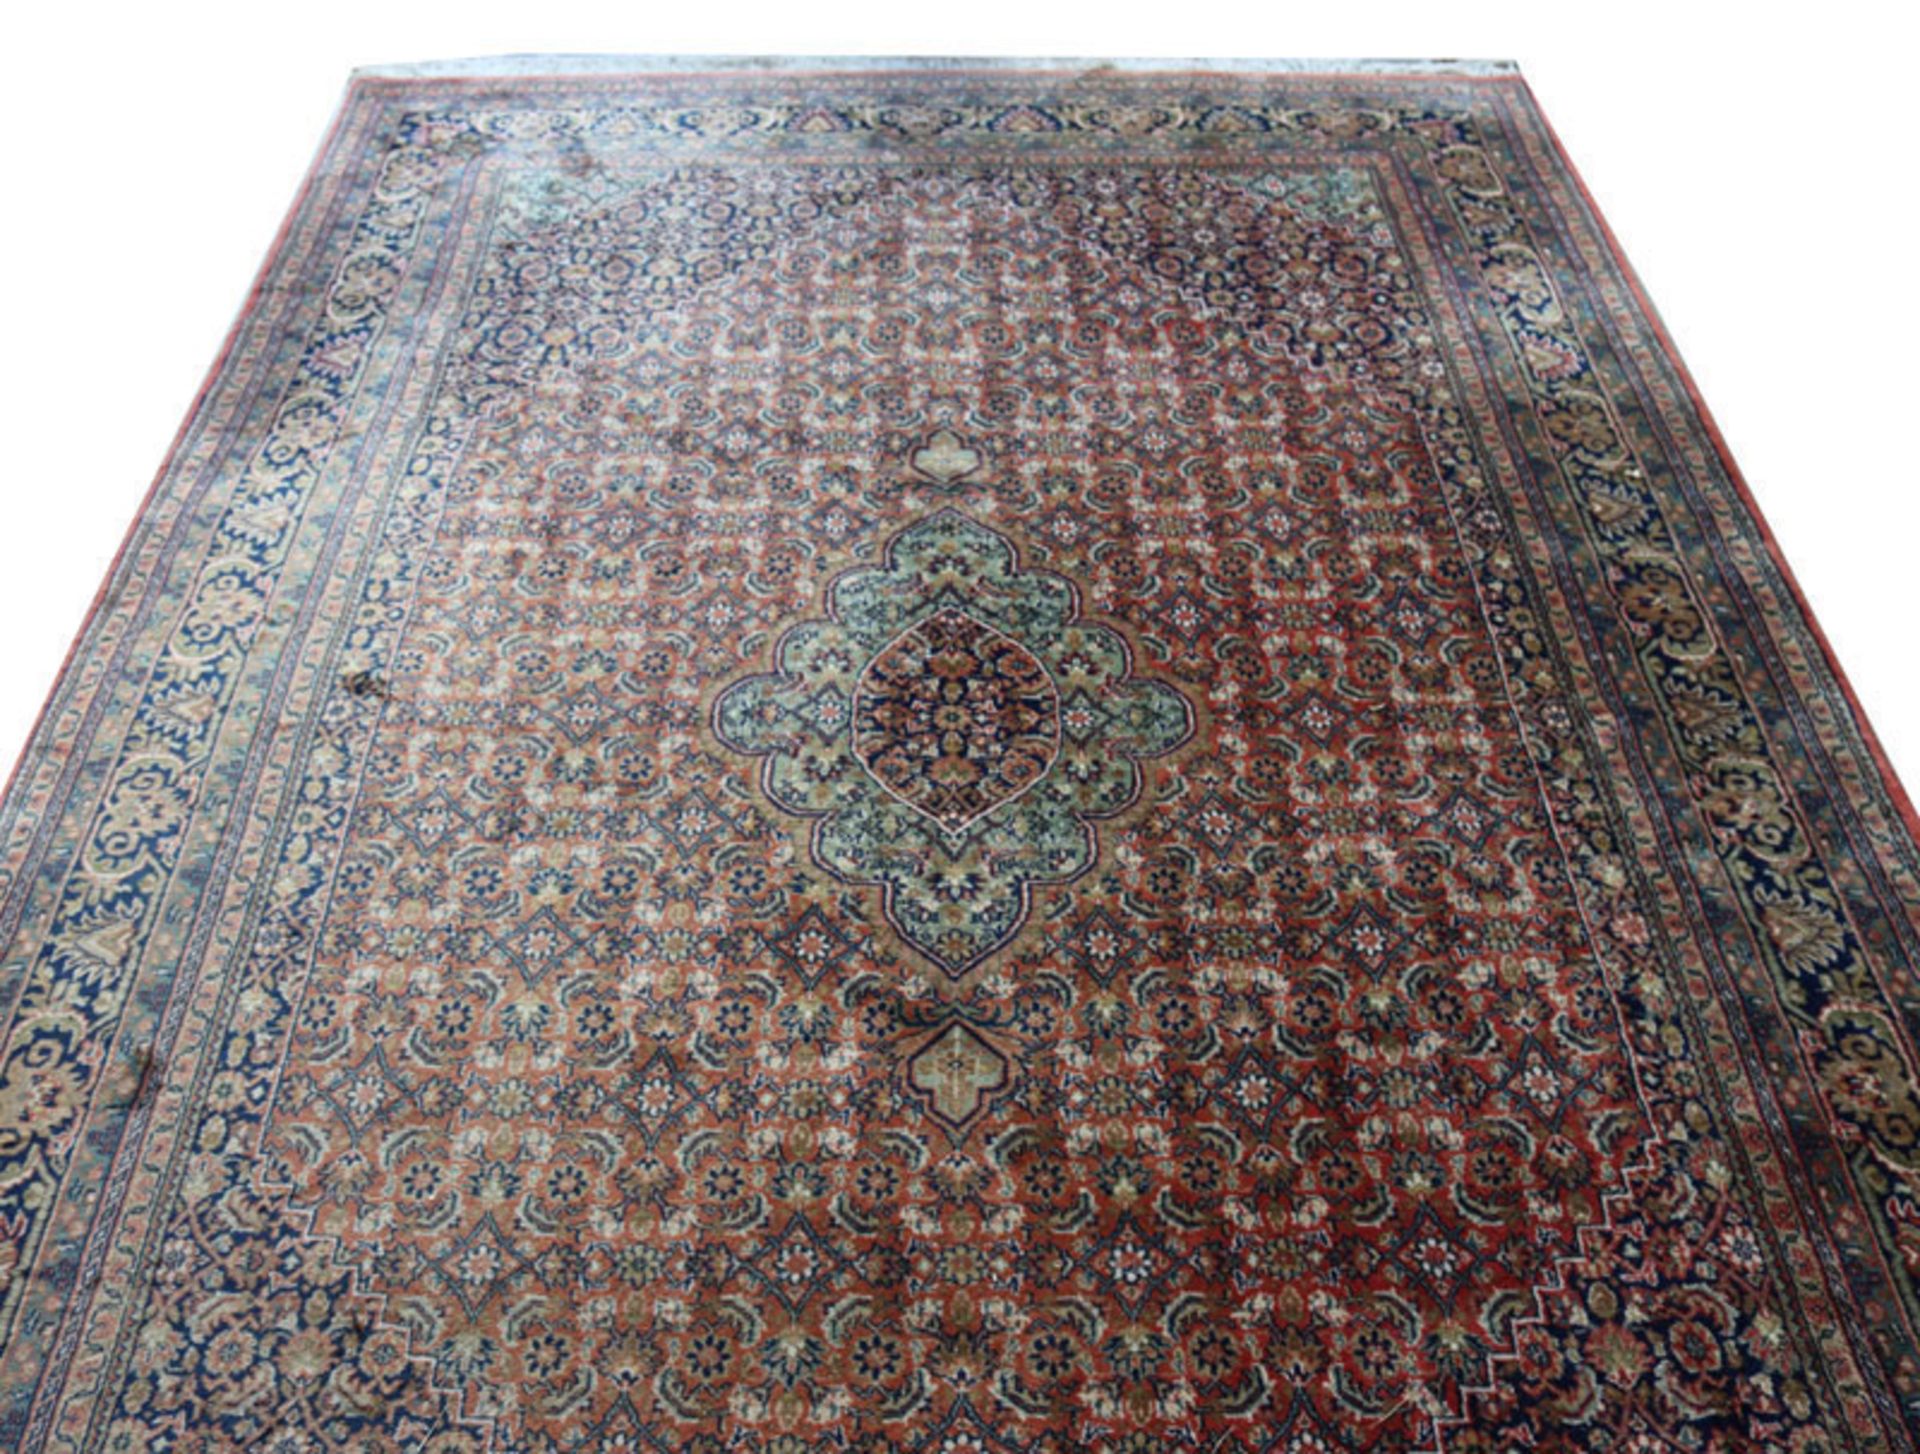 Teppich, Wiss, rose/dunkelblau/grün, Gebrauchsspuren, 306 cm x 193 cm, Abholung oder Versand per